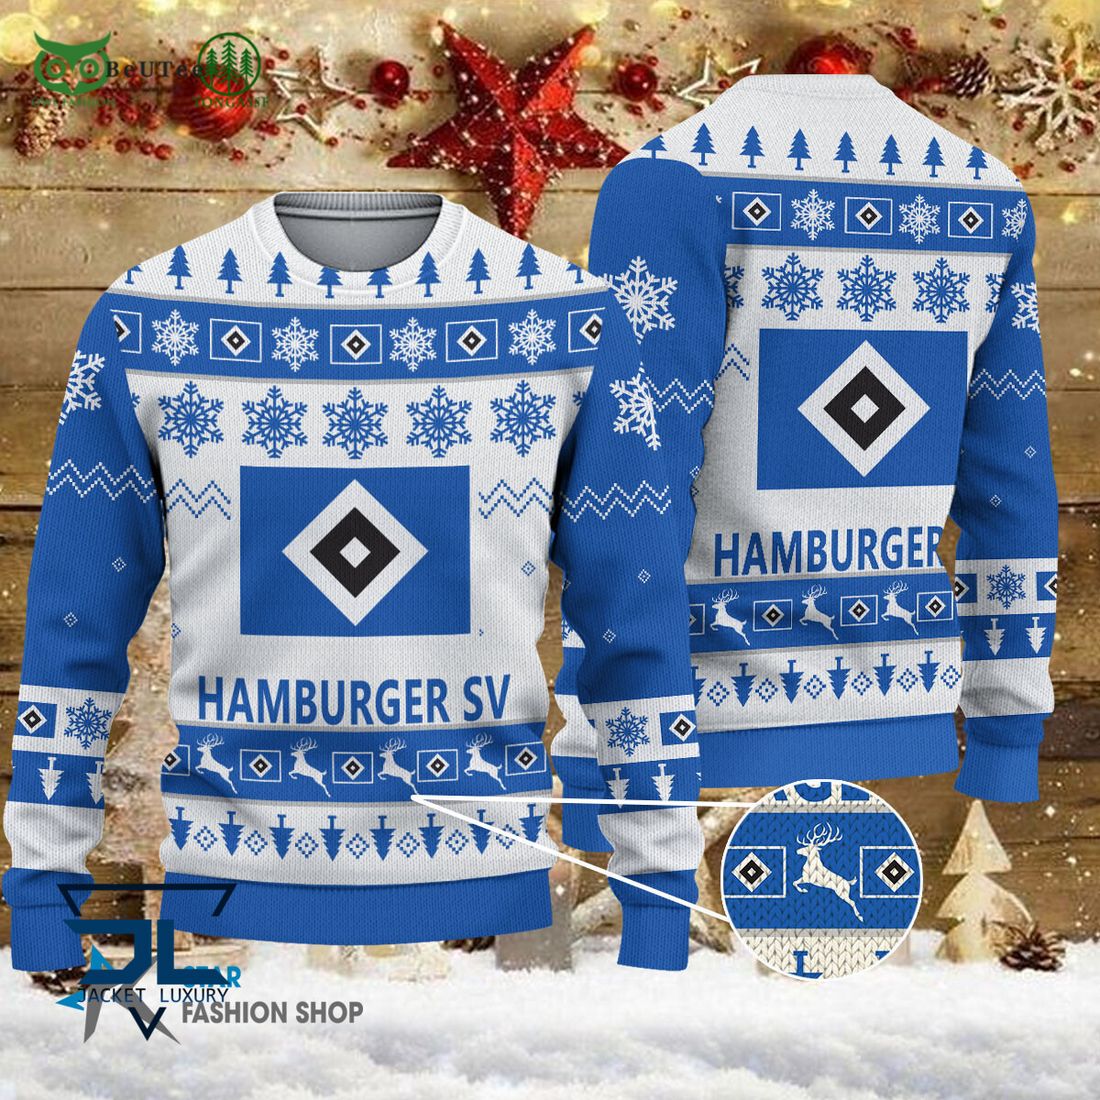 hamburger sv bundesliga football 3d ugly sweater 1 HuqJU